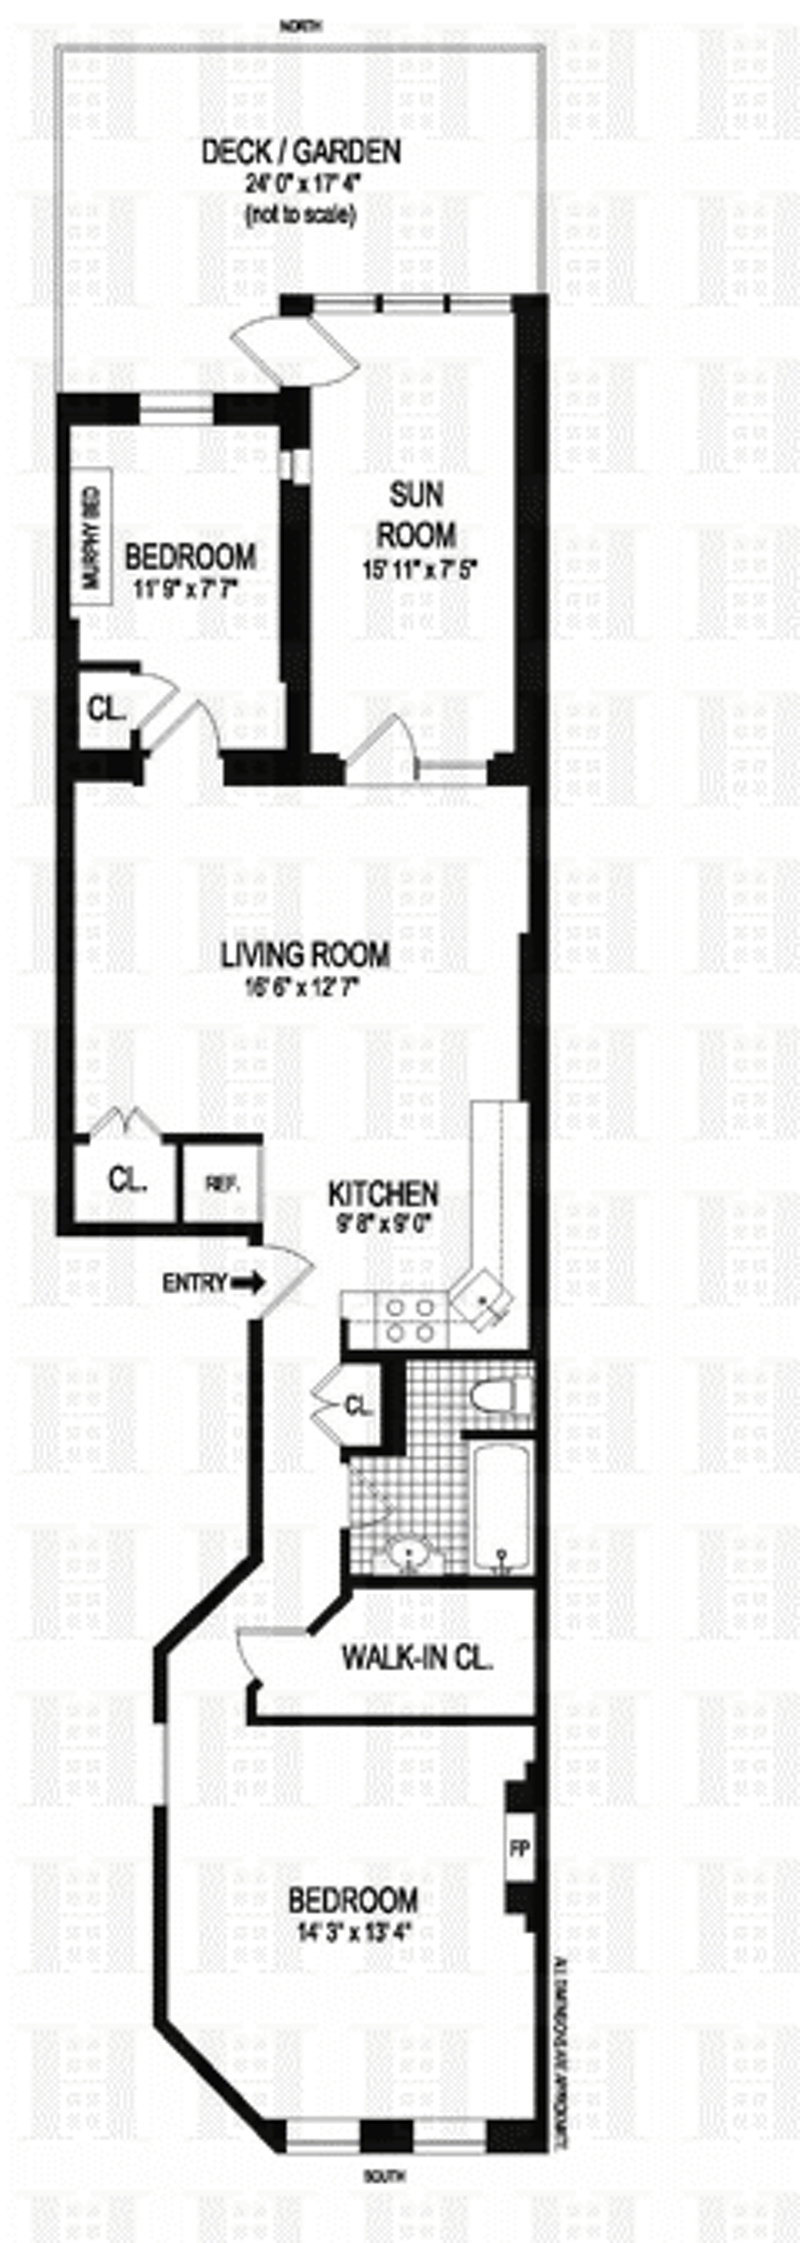 Floorplan for 119 West 85th Street, 1FR